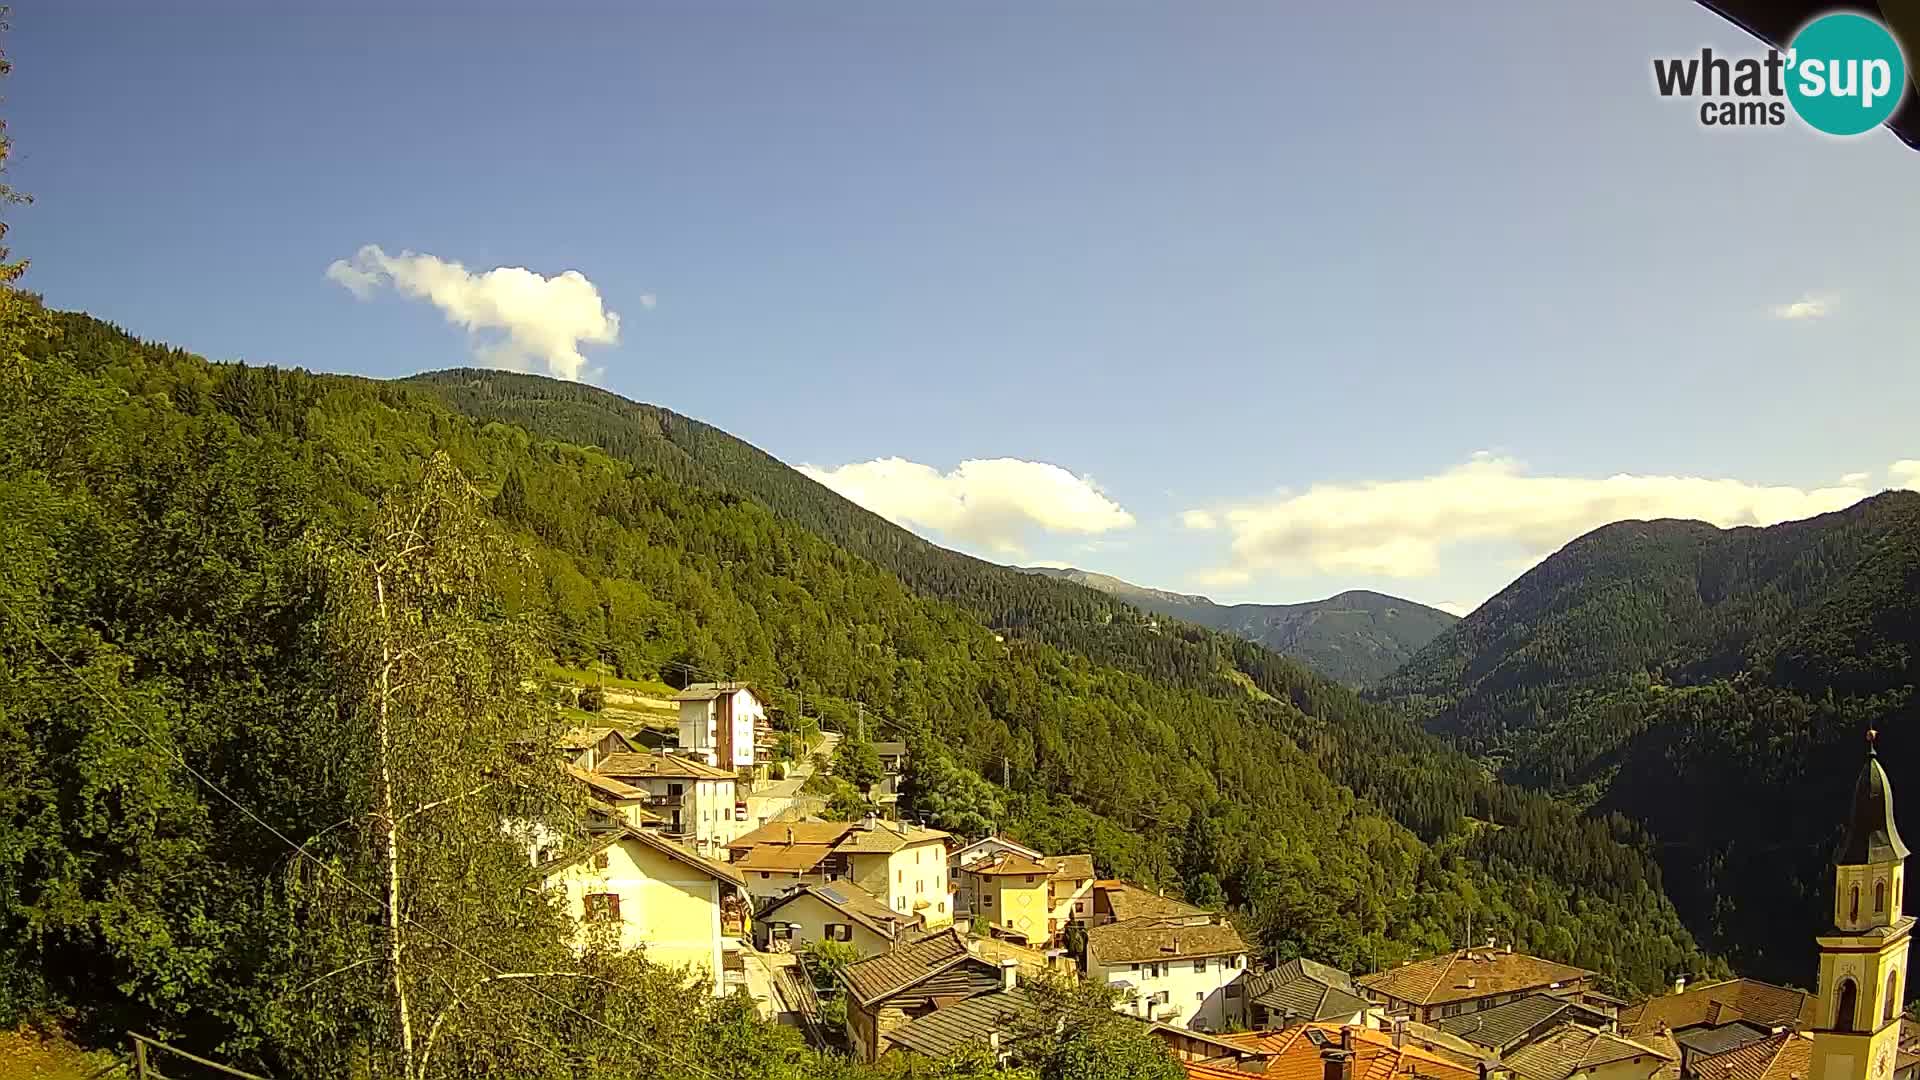 Camera en vivo Sover – Trentino Alto Adige webcam Lagorai